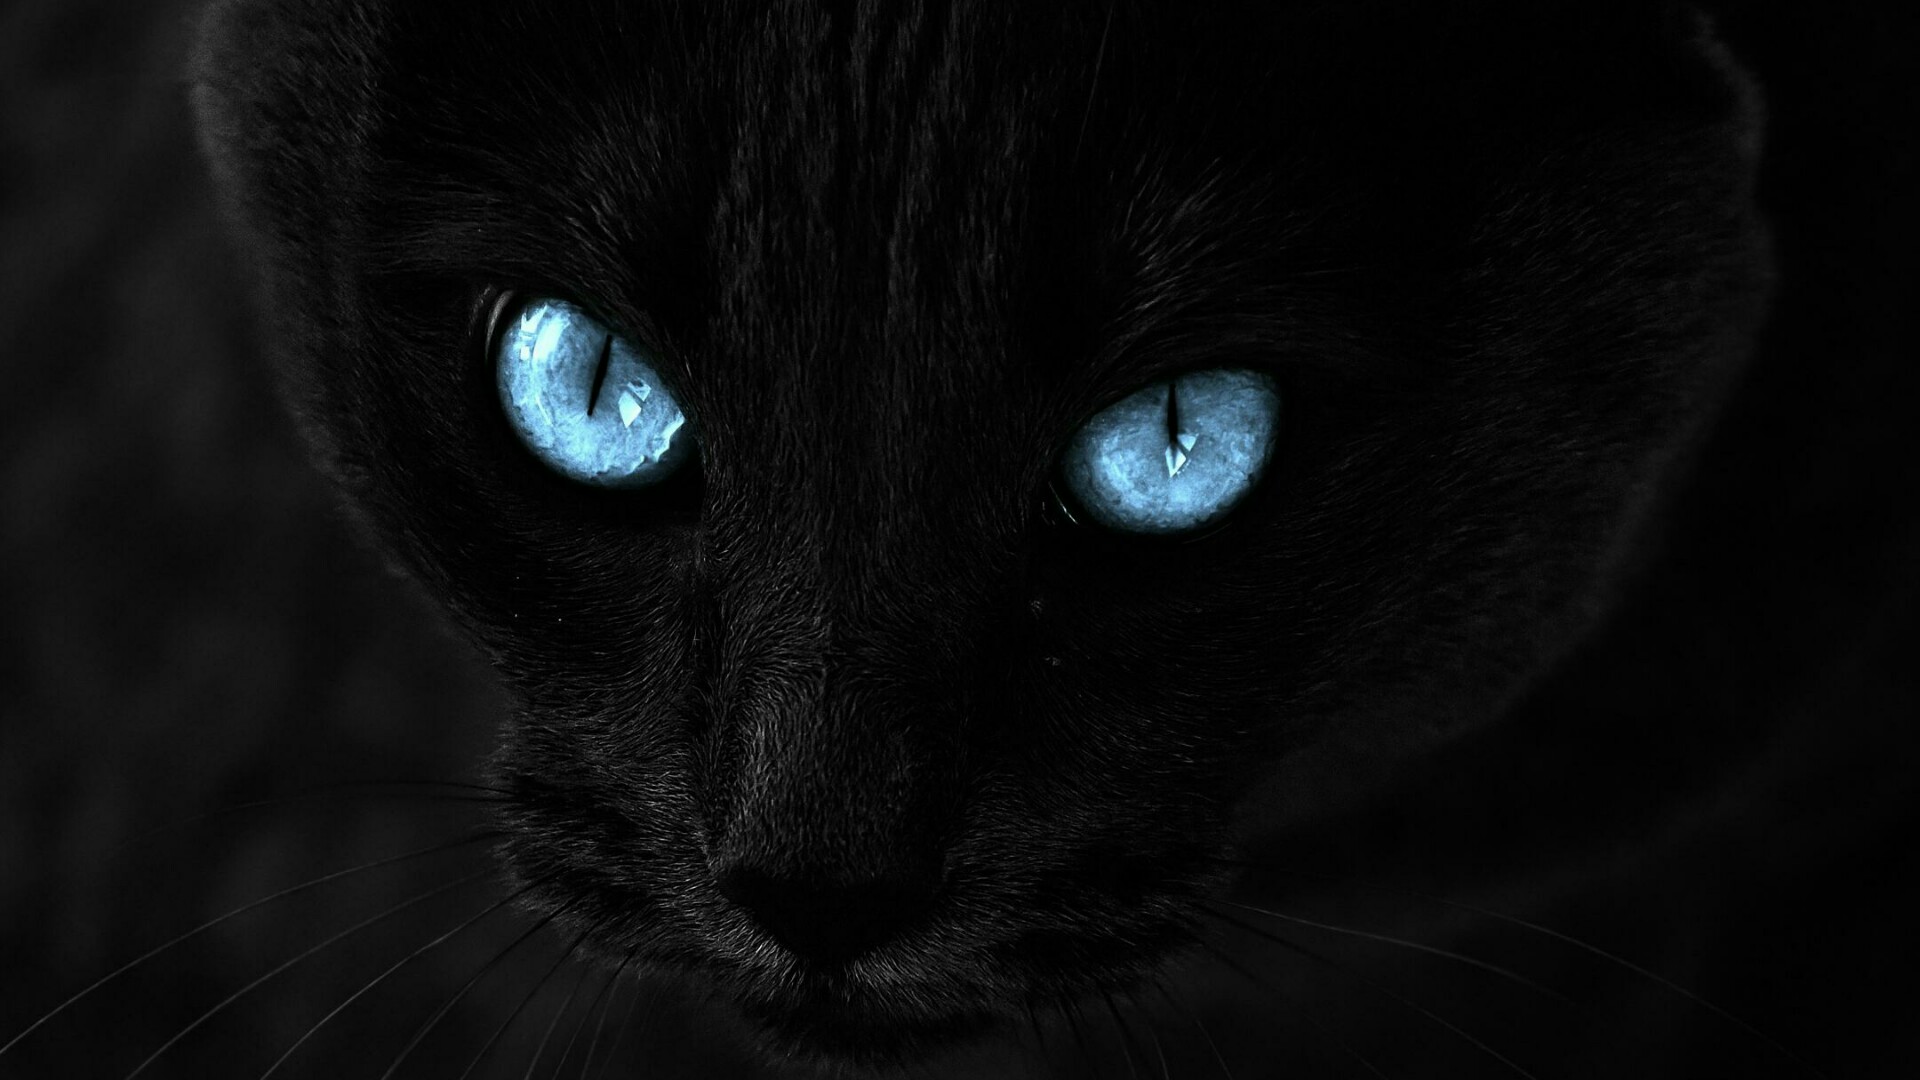 Black Cat With Blue Eyes Wallpaper | Wallpaper Studio 10 | Tens of ...